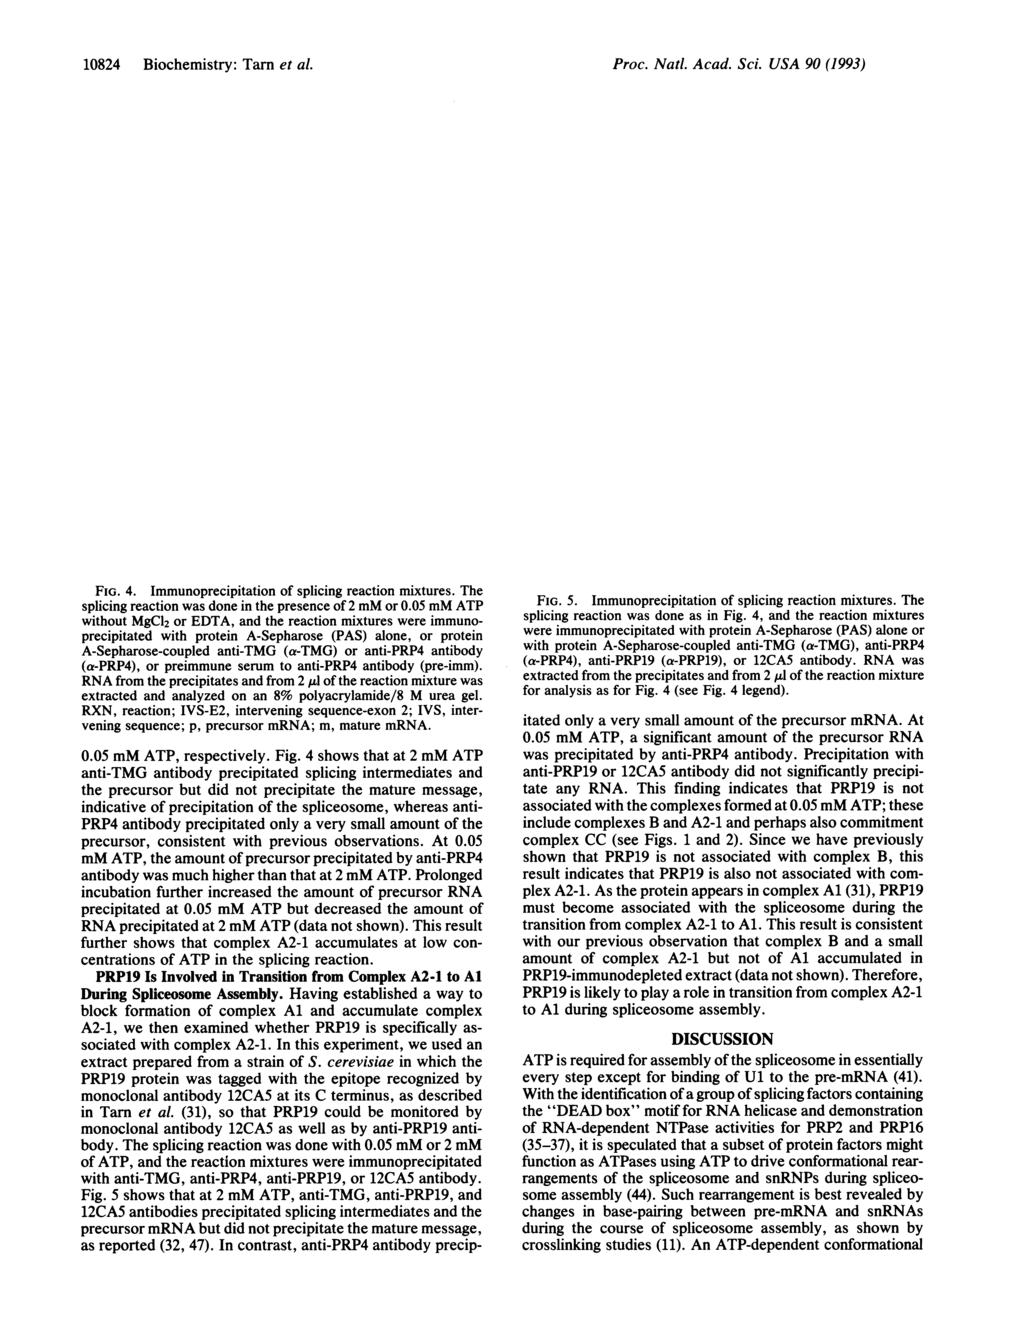 10824 Biochemistry: Tam et al. ATP 2 mm E Z Cl) x <: t 12 CE: CL t QL IVS-E2- IVS- a a p "1l EL 0q G ts C Zx 0.05 mm <Cm- < 76. E -; Erc Proc. Natl. Acad. Sci. USA 90 (1993) ATP 2 mm 0.